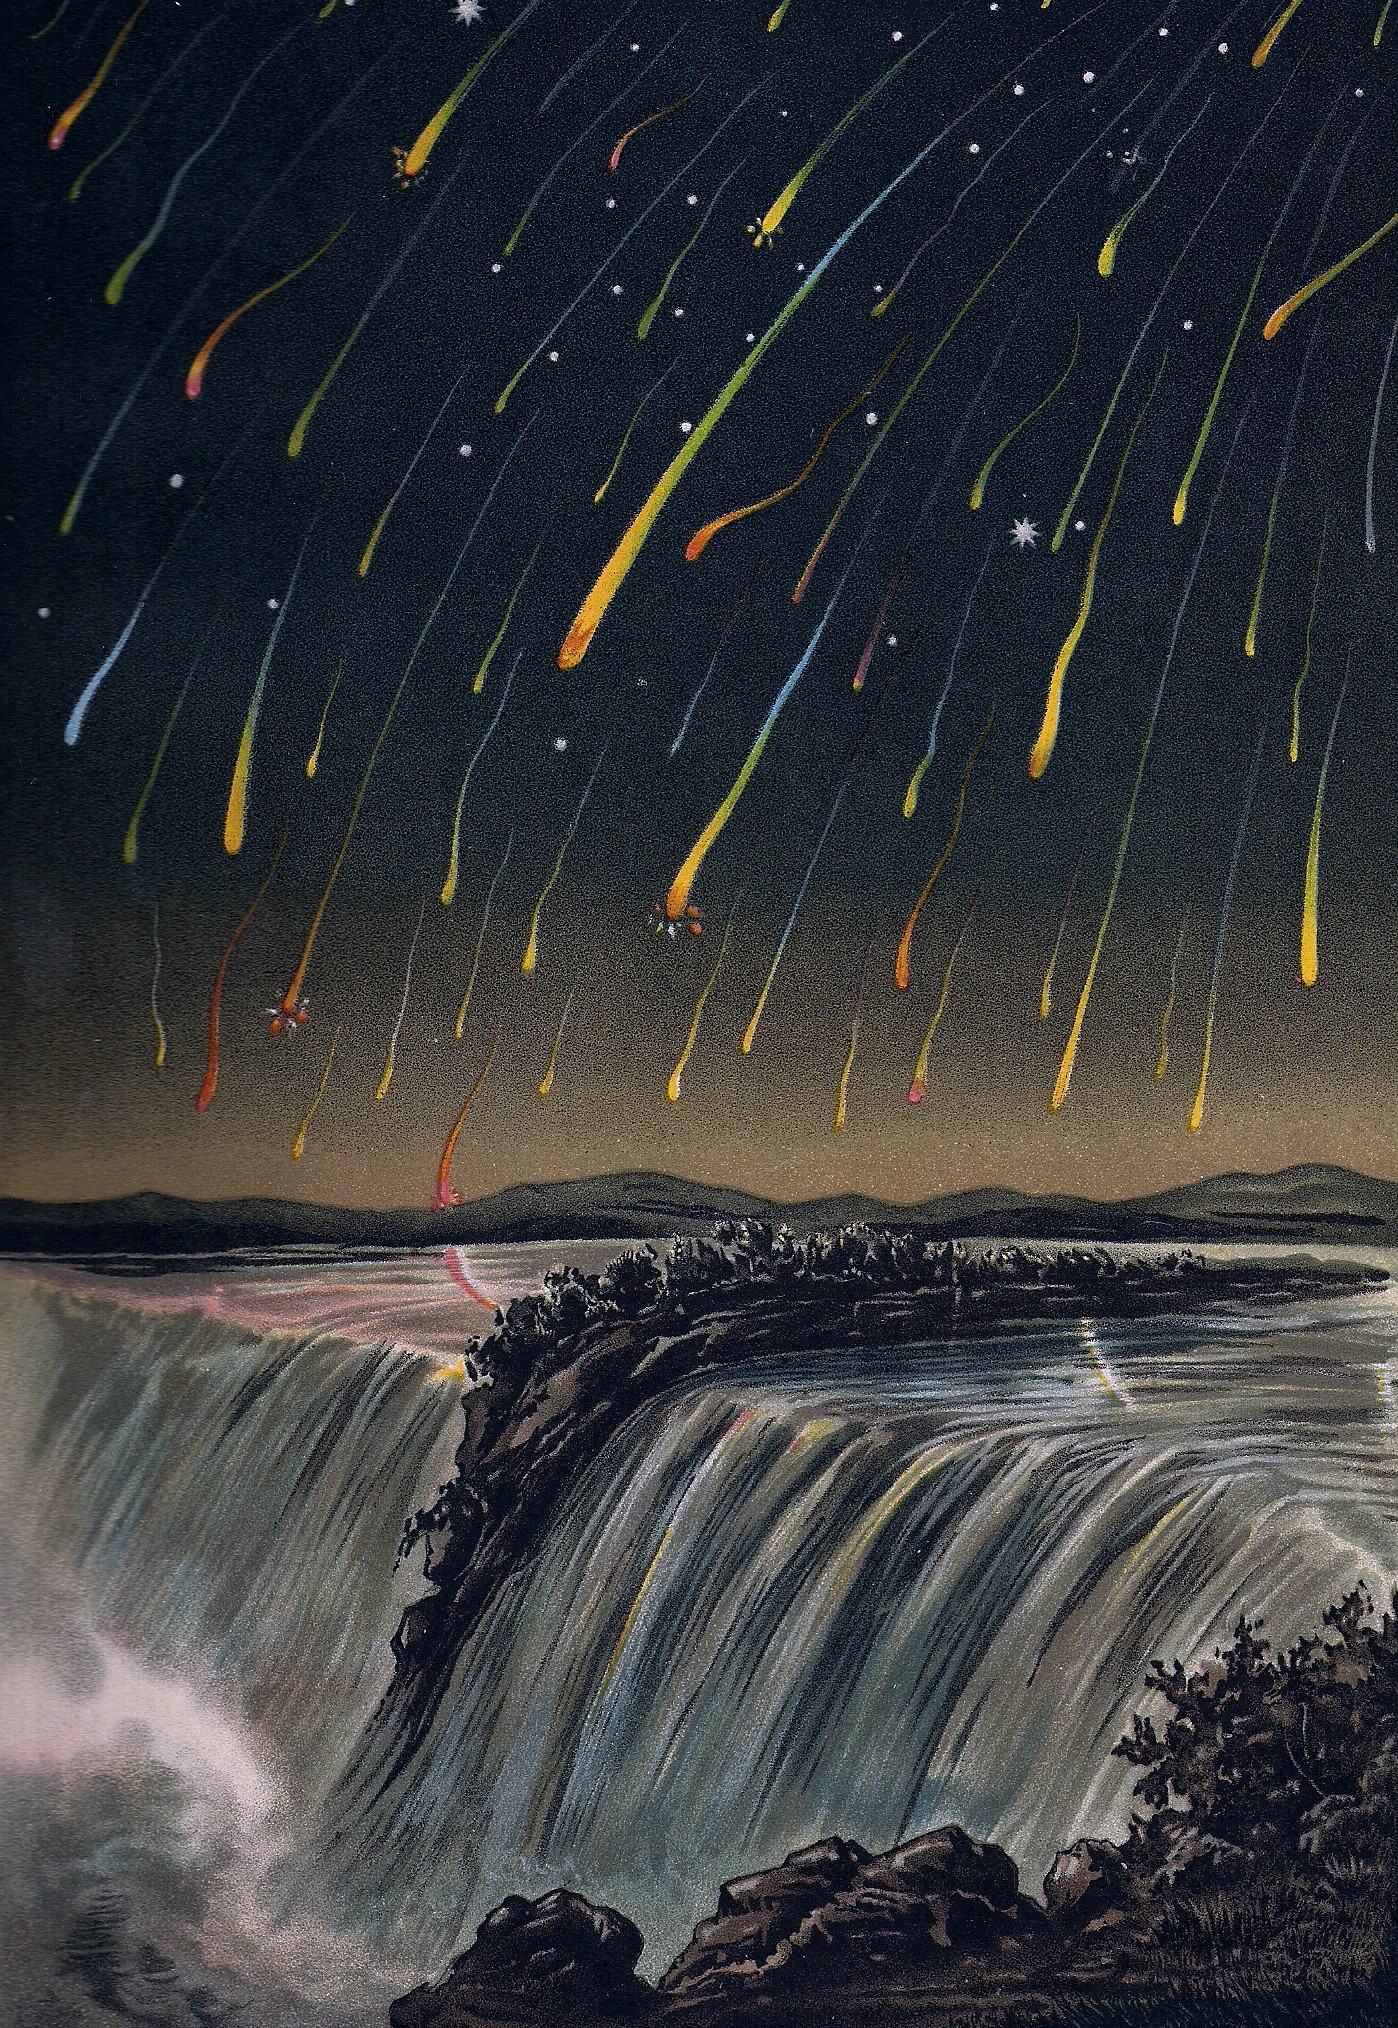 The 1833 Leonid Meteor storm, as seen over Niagara Falls.